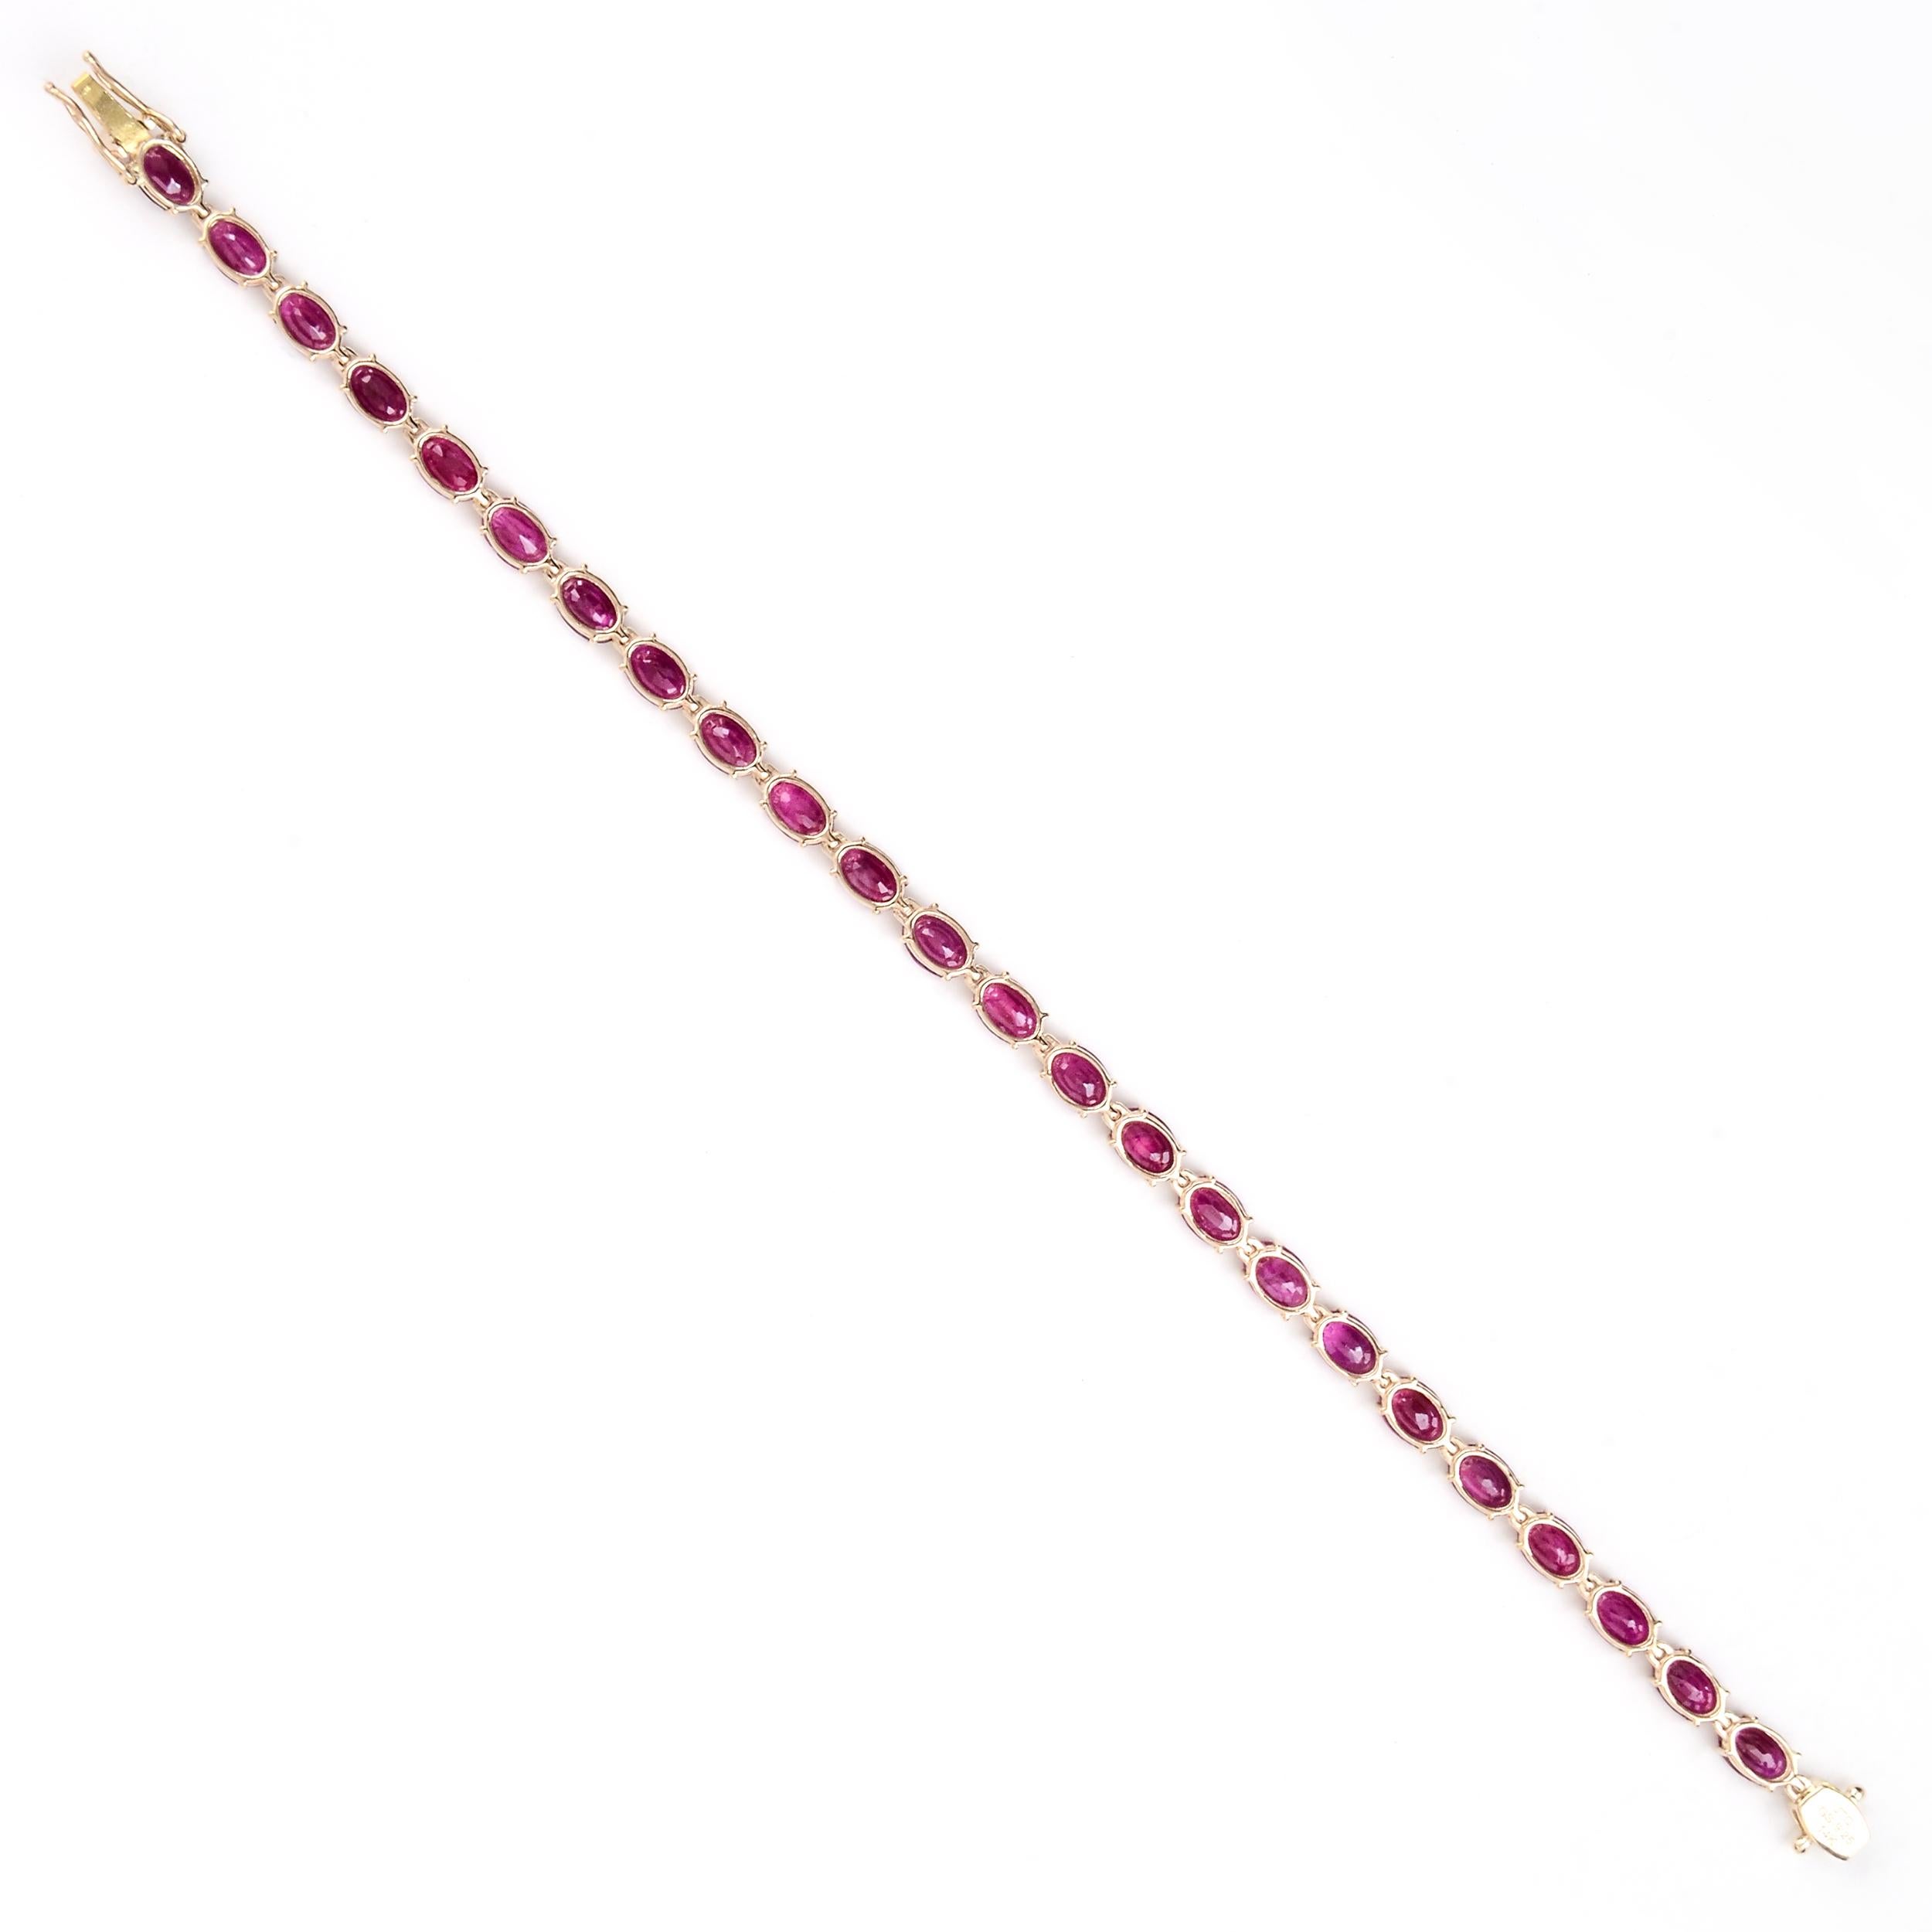 Women's 14K 8.40ctw Ruby Link Bracelet - Exquisite Gemstone Elegance, Timeless Luxury For Sale